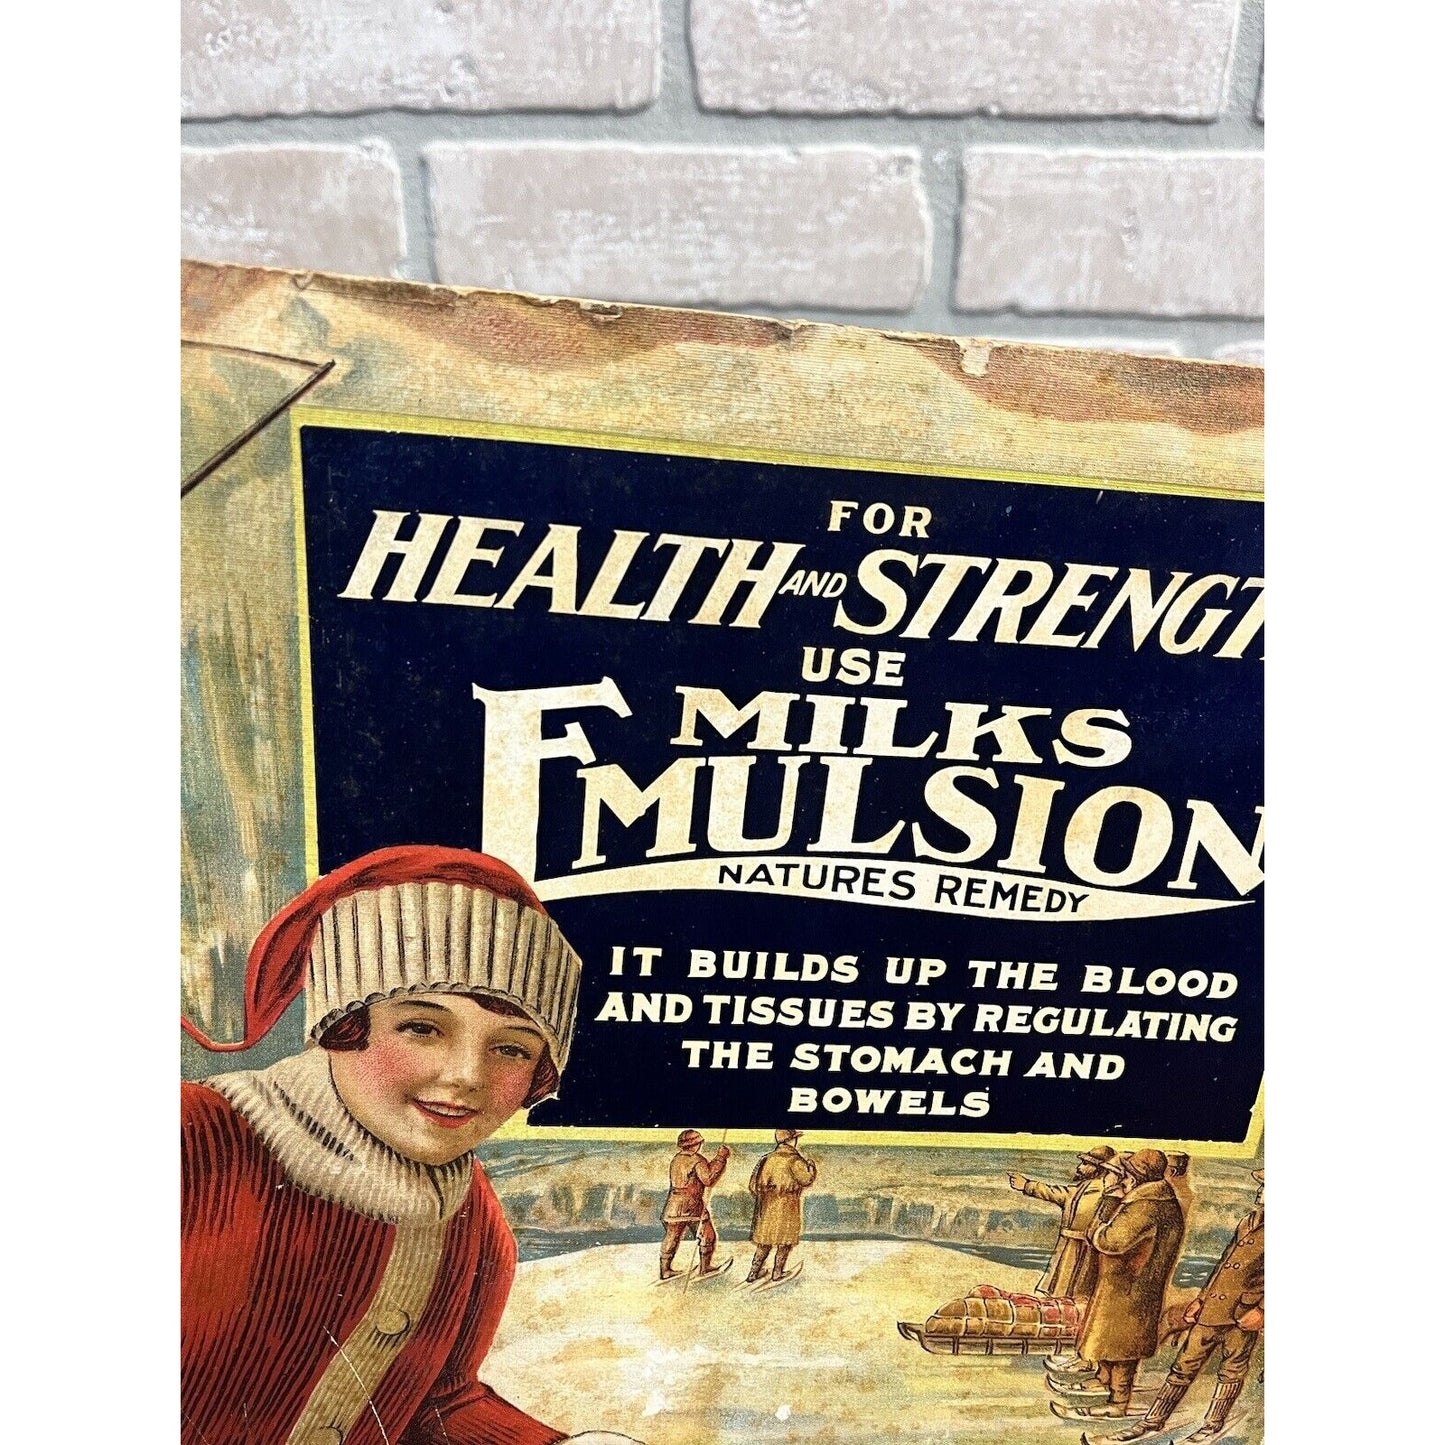 RARE Vintage Early 1900s Milks Emulsion Medicine Advertising Sign Christmas